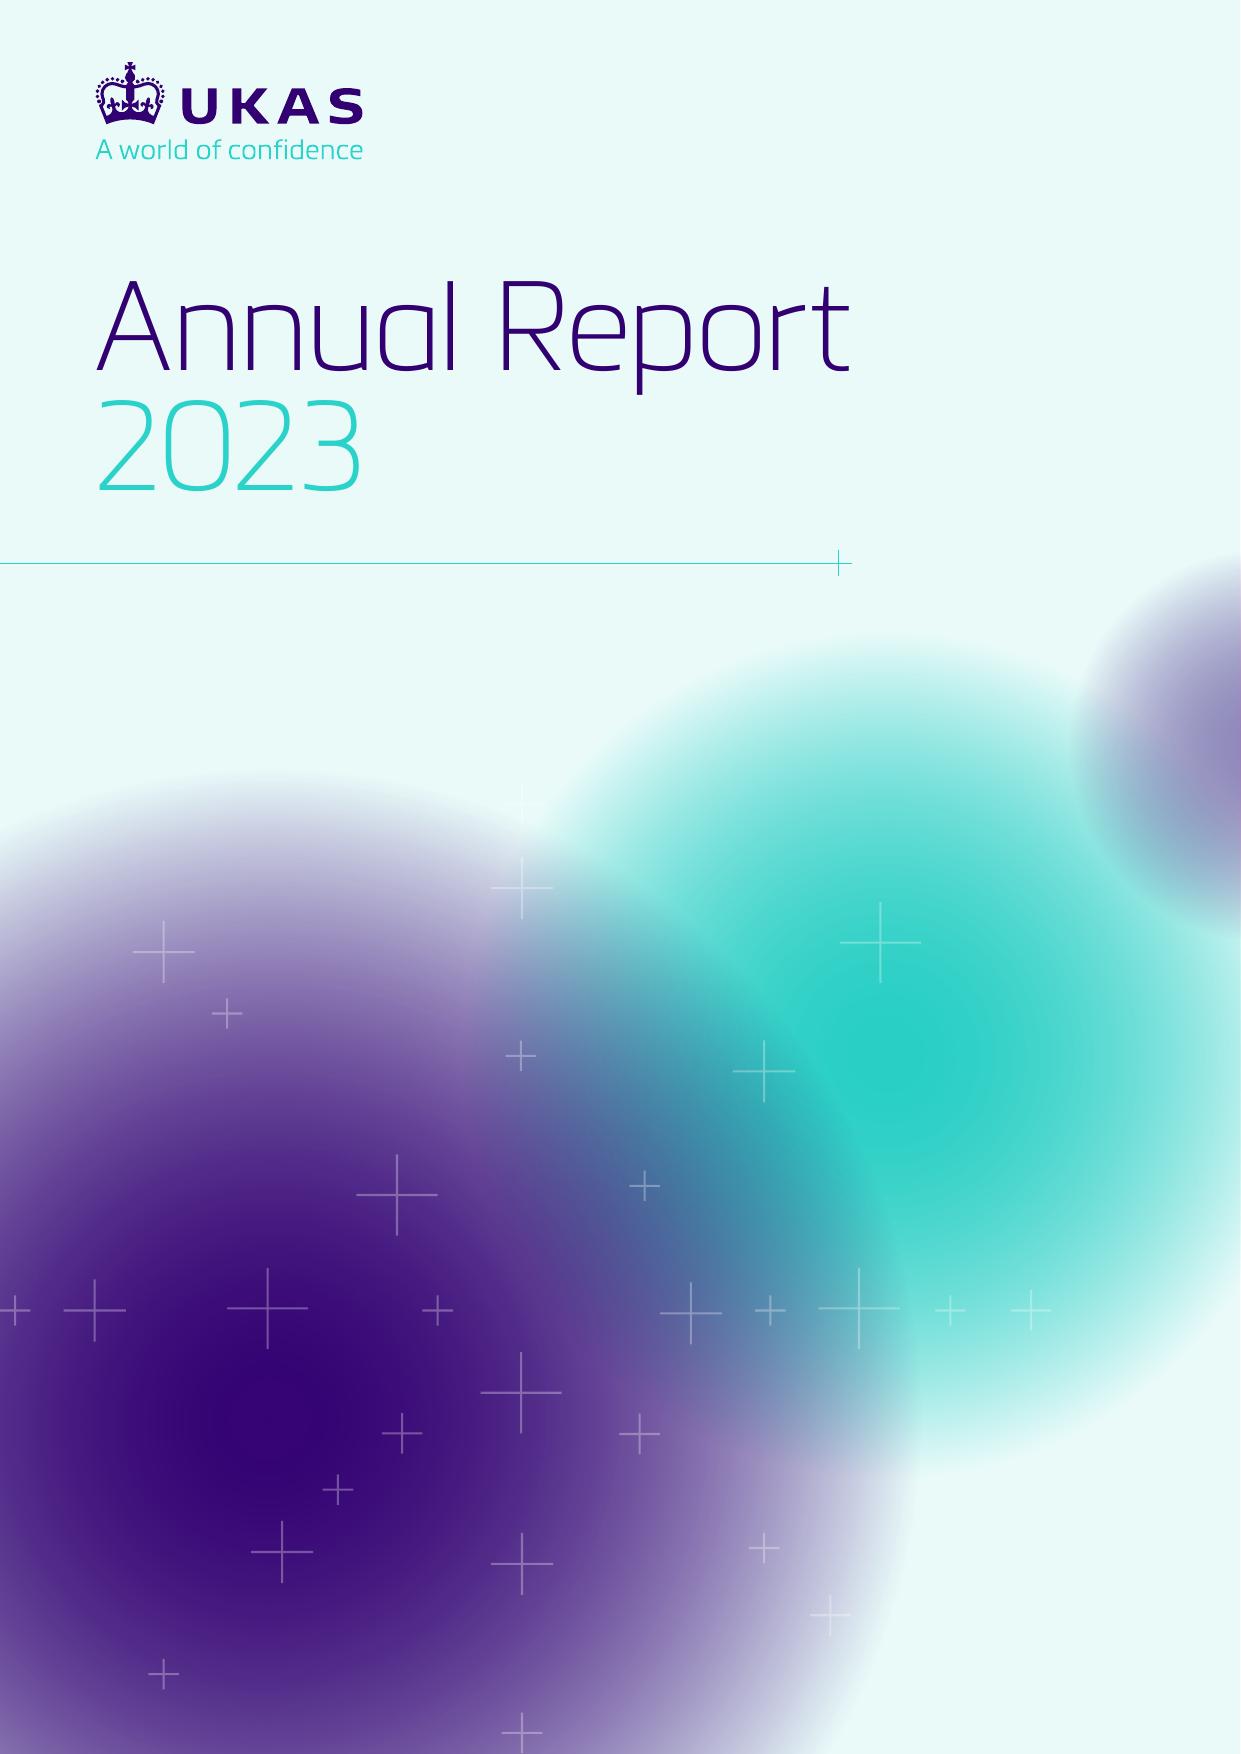 UKAS 2023 Annual Report